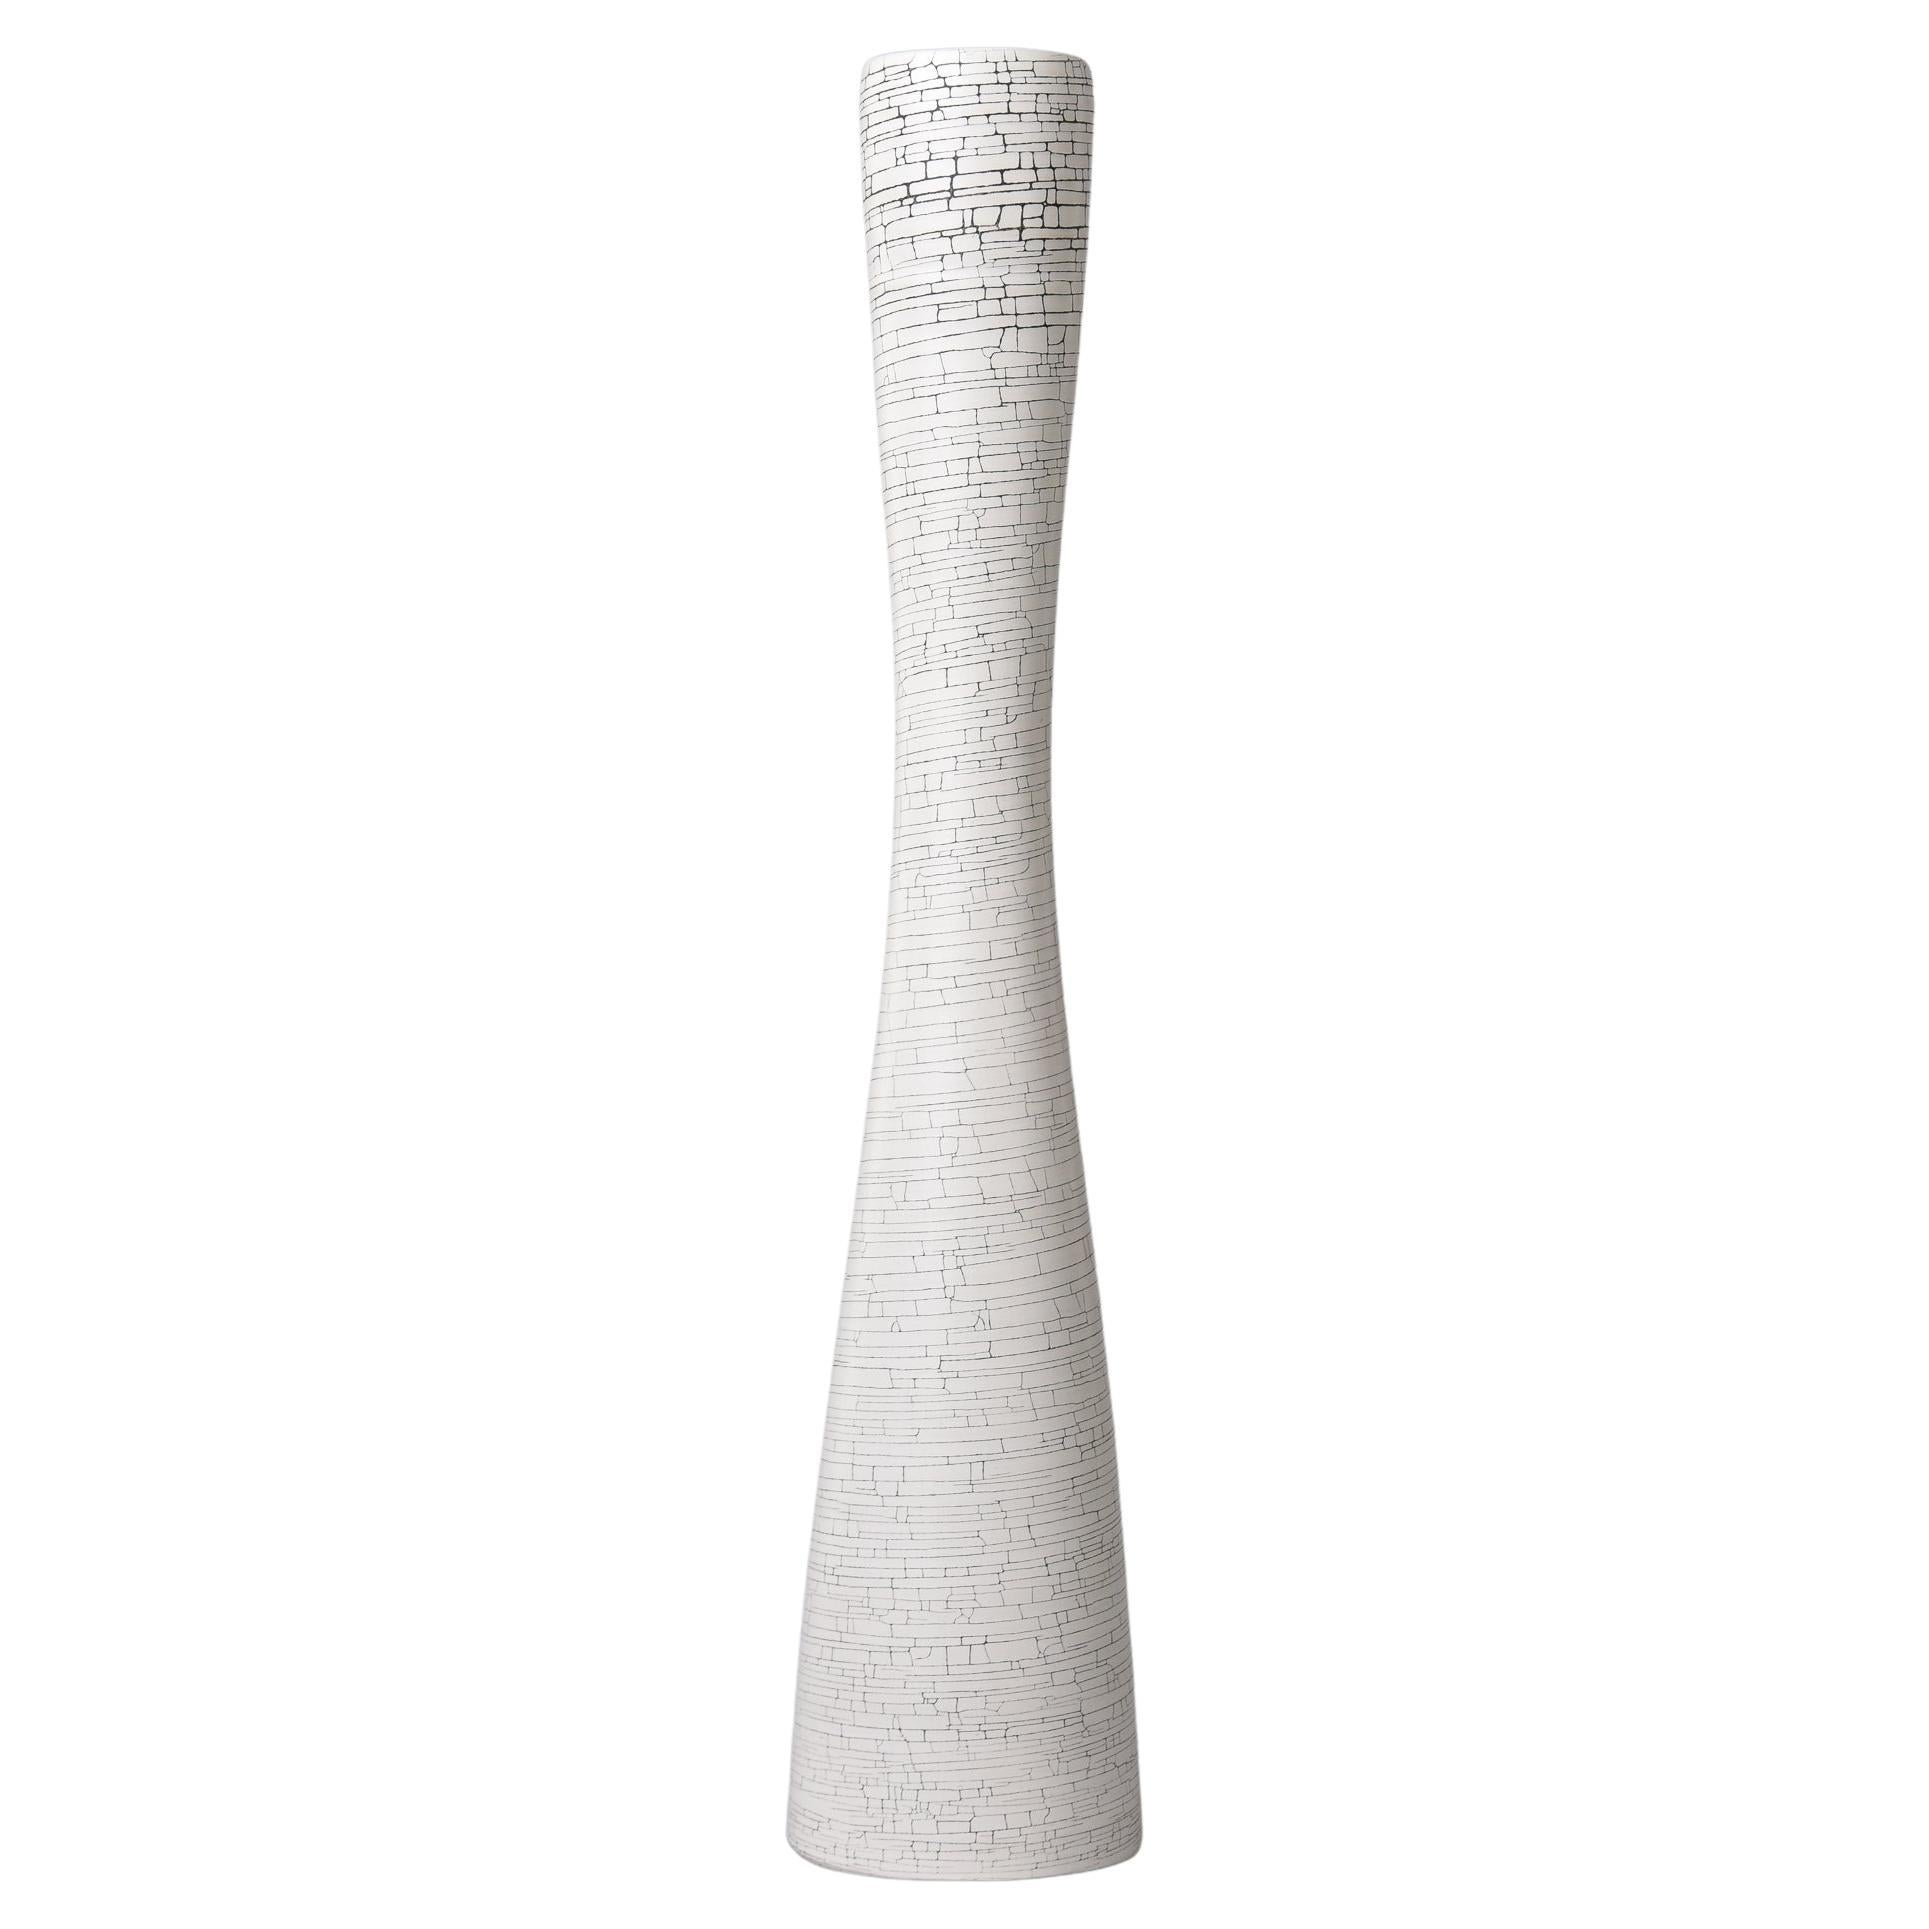 Rina Menardi grand vase à flûtes blanc craquelé neuf